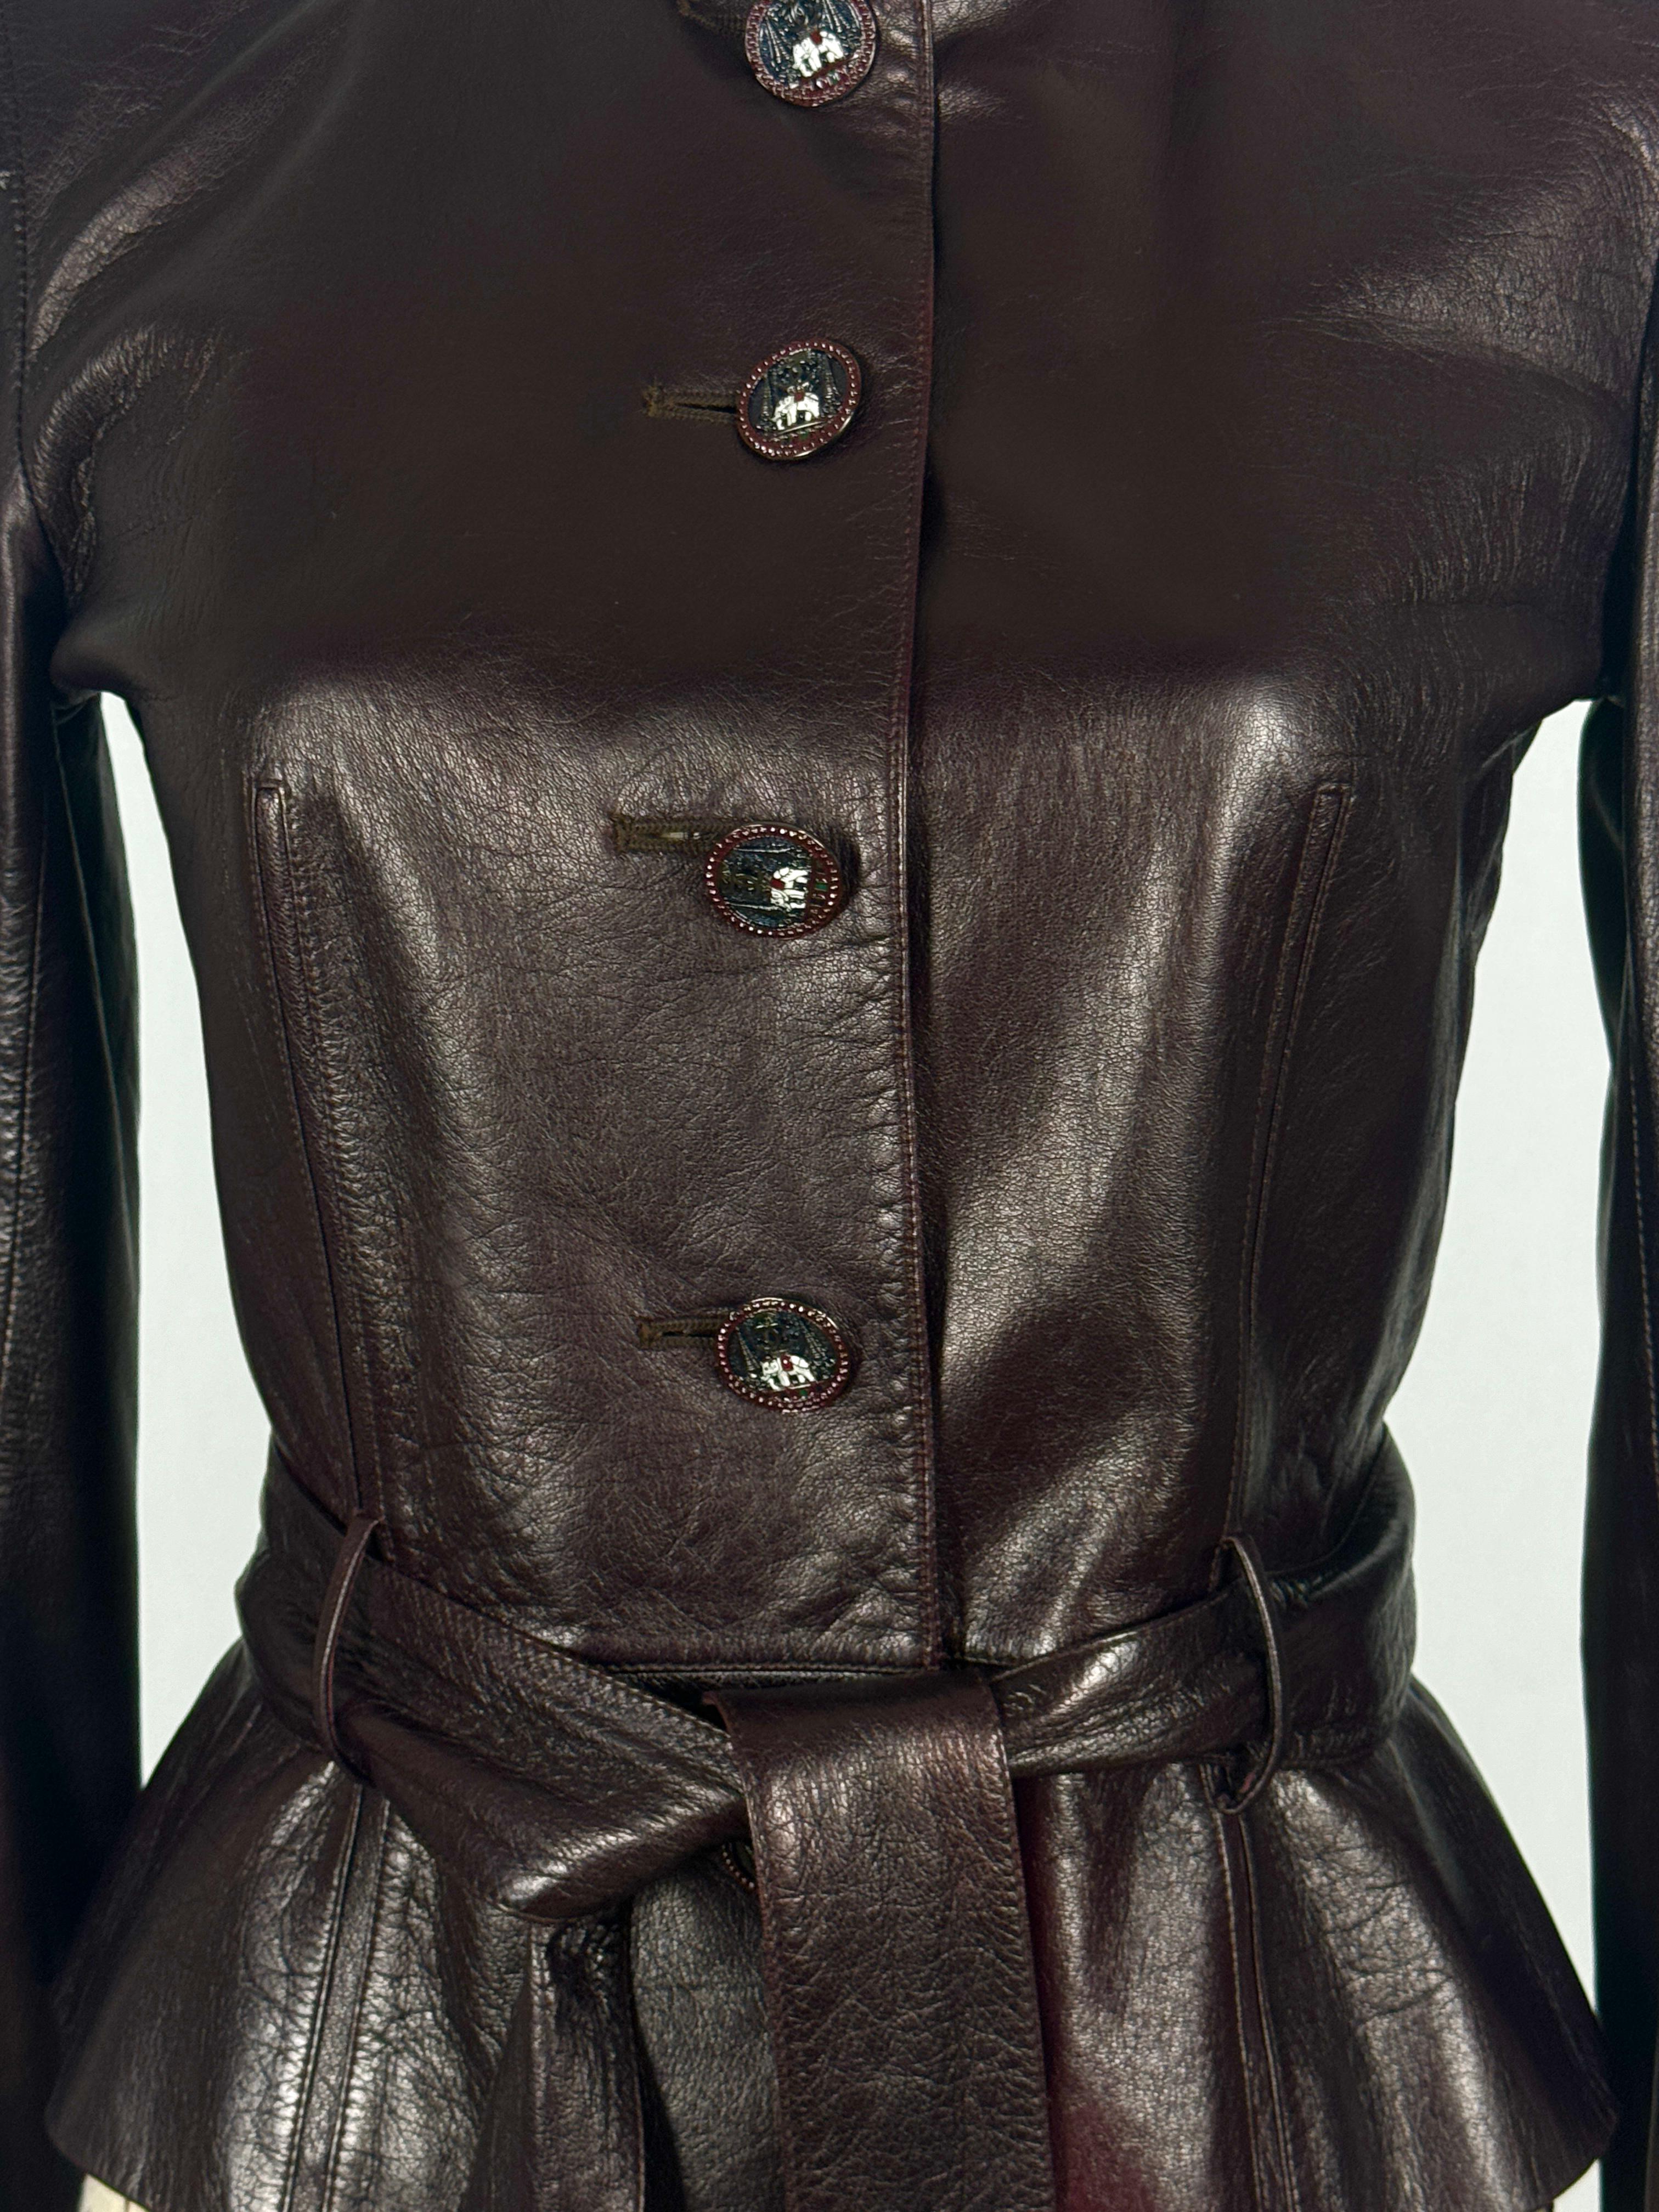 Chanel Rarest Paris / Bombay Runway Leather Jacket For Sale 2